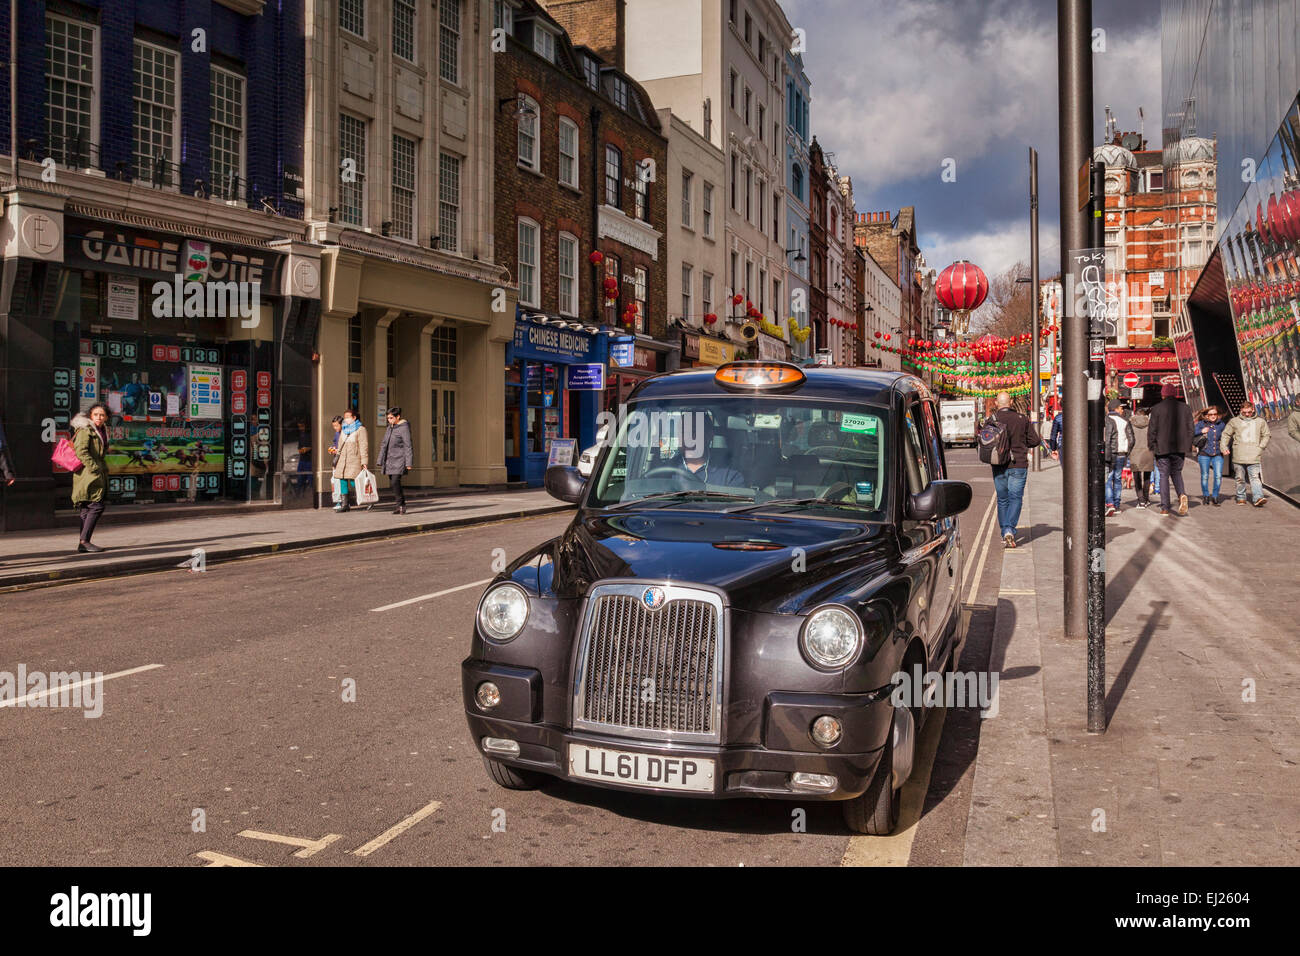 London Taxi Cab, Chinatown, London, England. Stockfoto